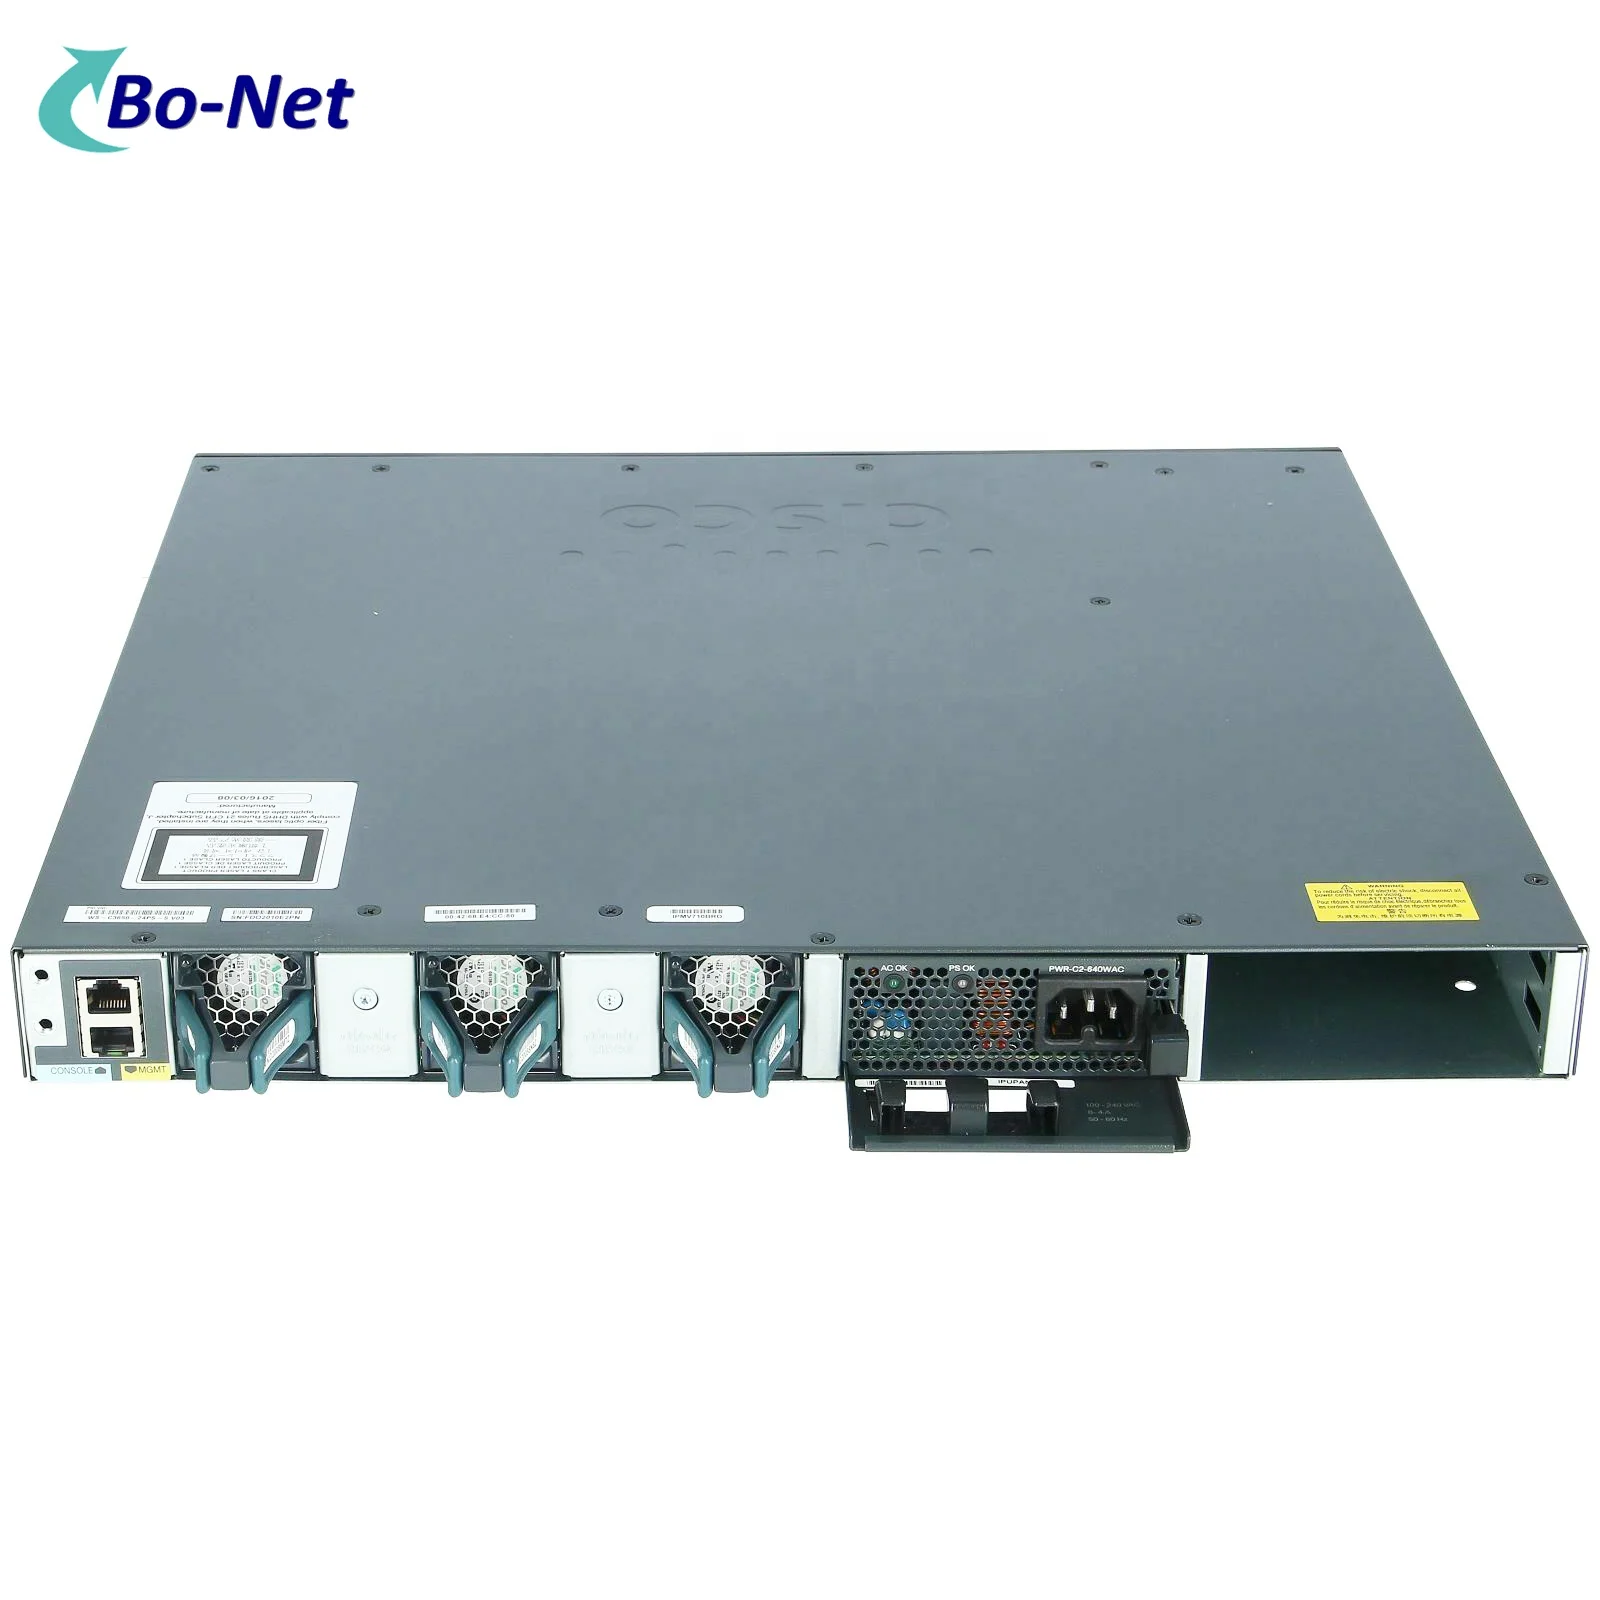 CISCO 3650 Series switch WS-C3650-24PS-S 24 Port PoE 2x10G Uplink LAN